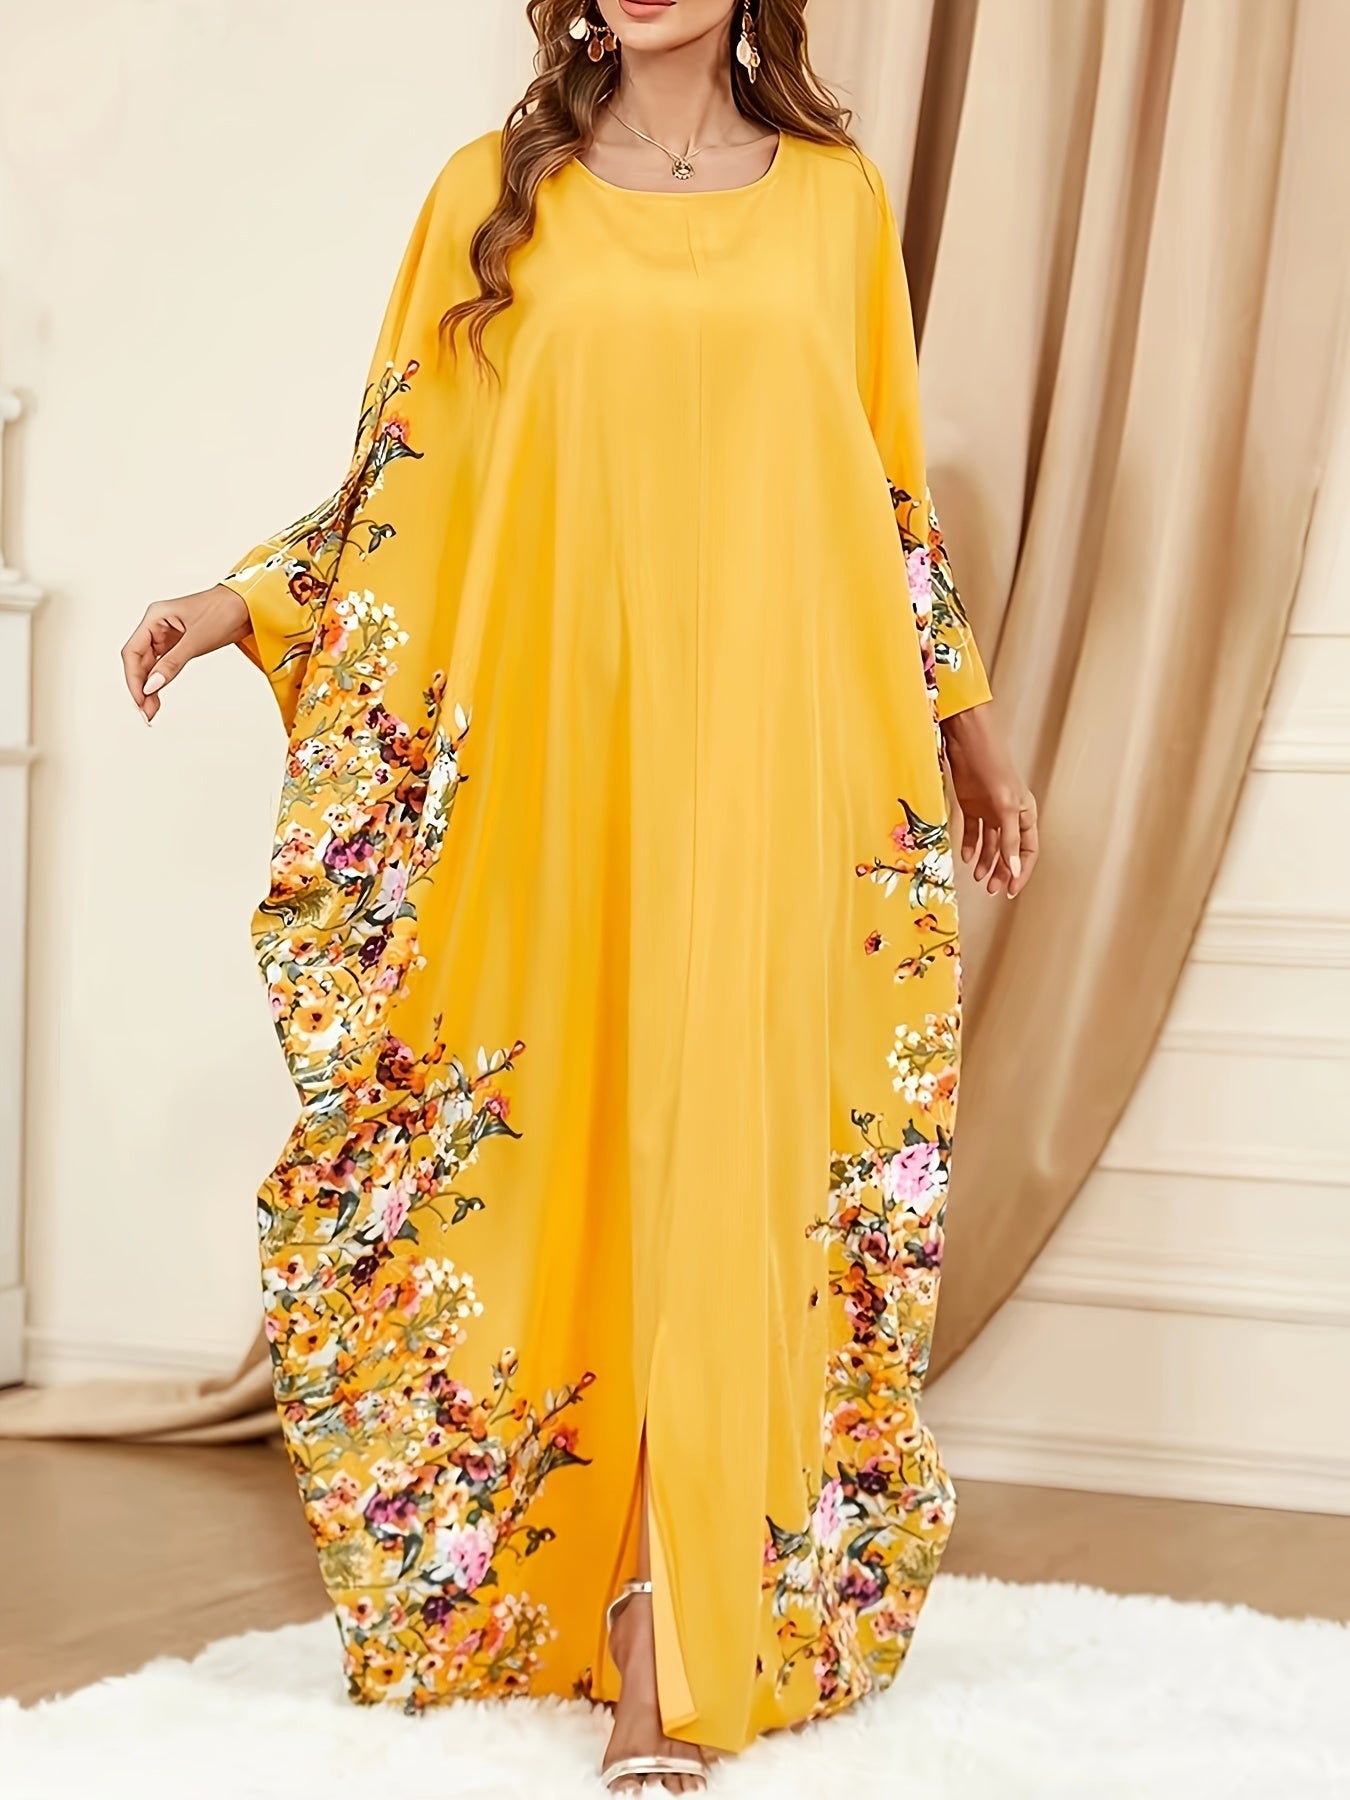 "Floral Print Crew Neck Kaftan Abaya, Elegant Batwing Sleeve Maxi Dress for Women's Clothing"